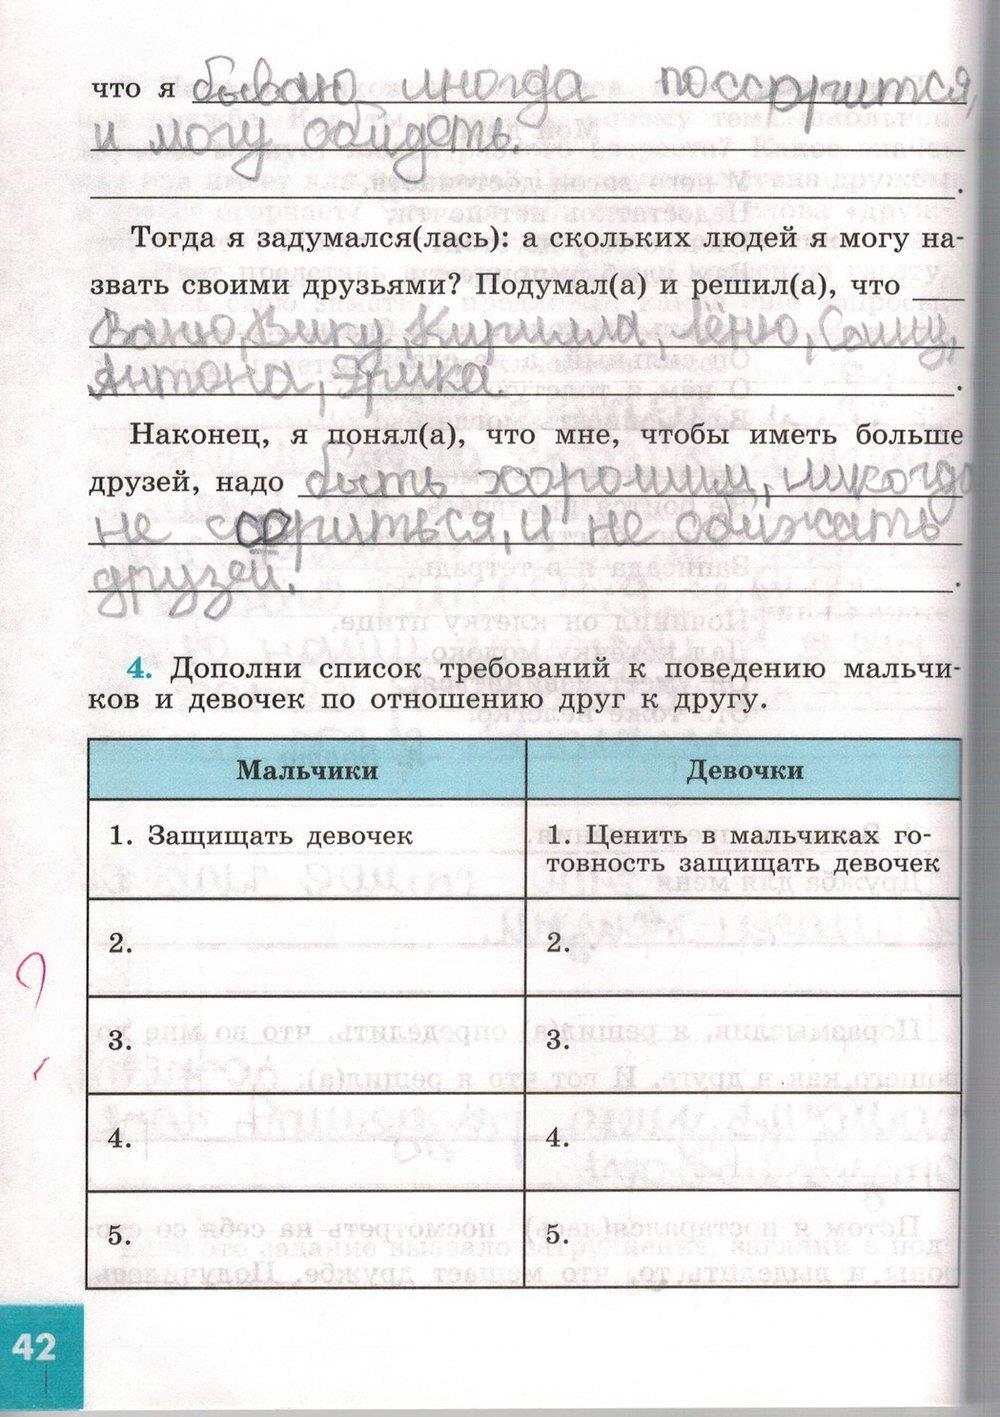 гдз 5 класс рабочая тетрадь страница 42 обществознание Иванова, Хотеенкова